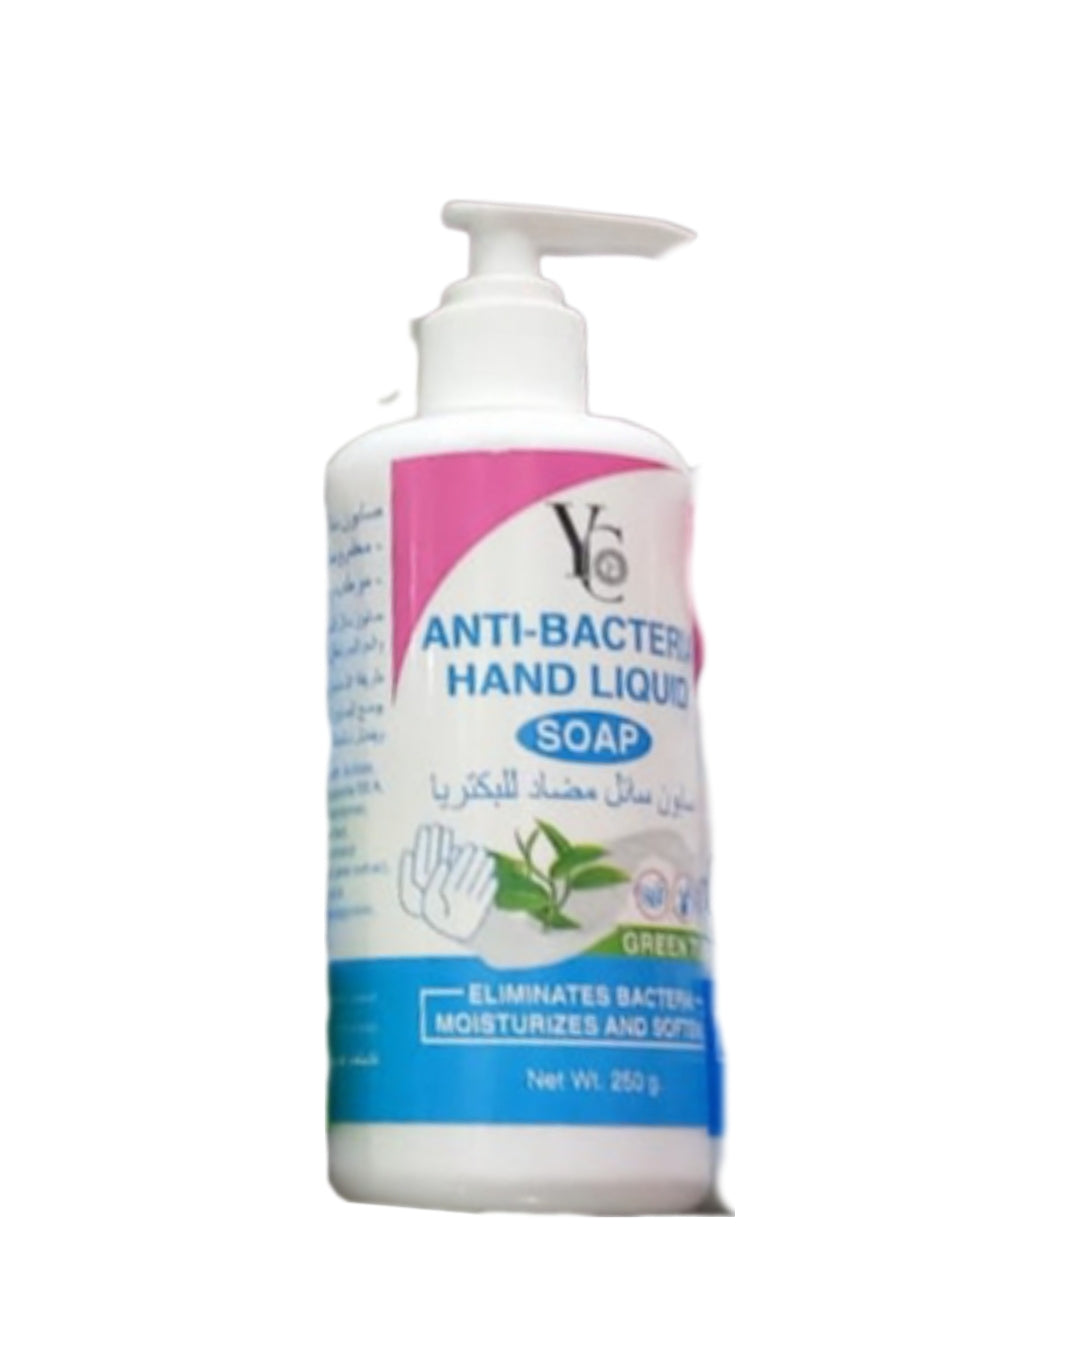 YC Anti-Bacteria Hand Liquid Soap